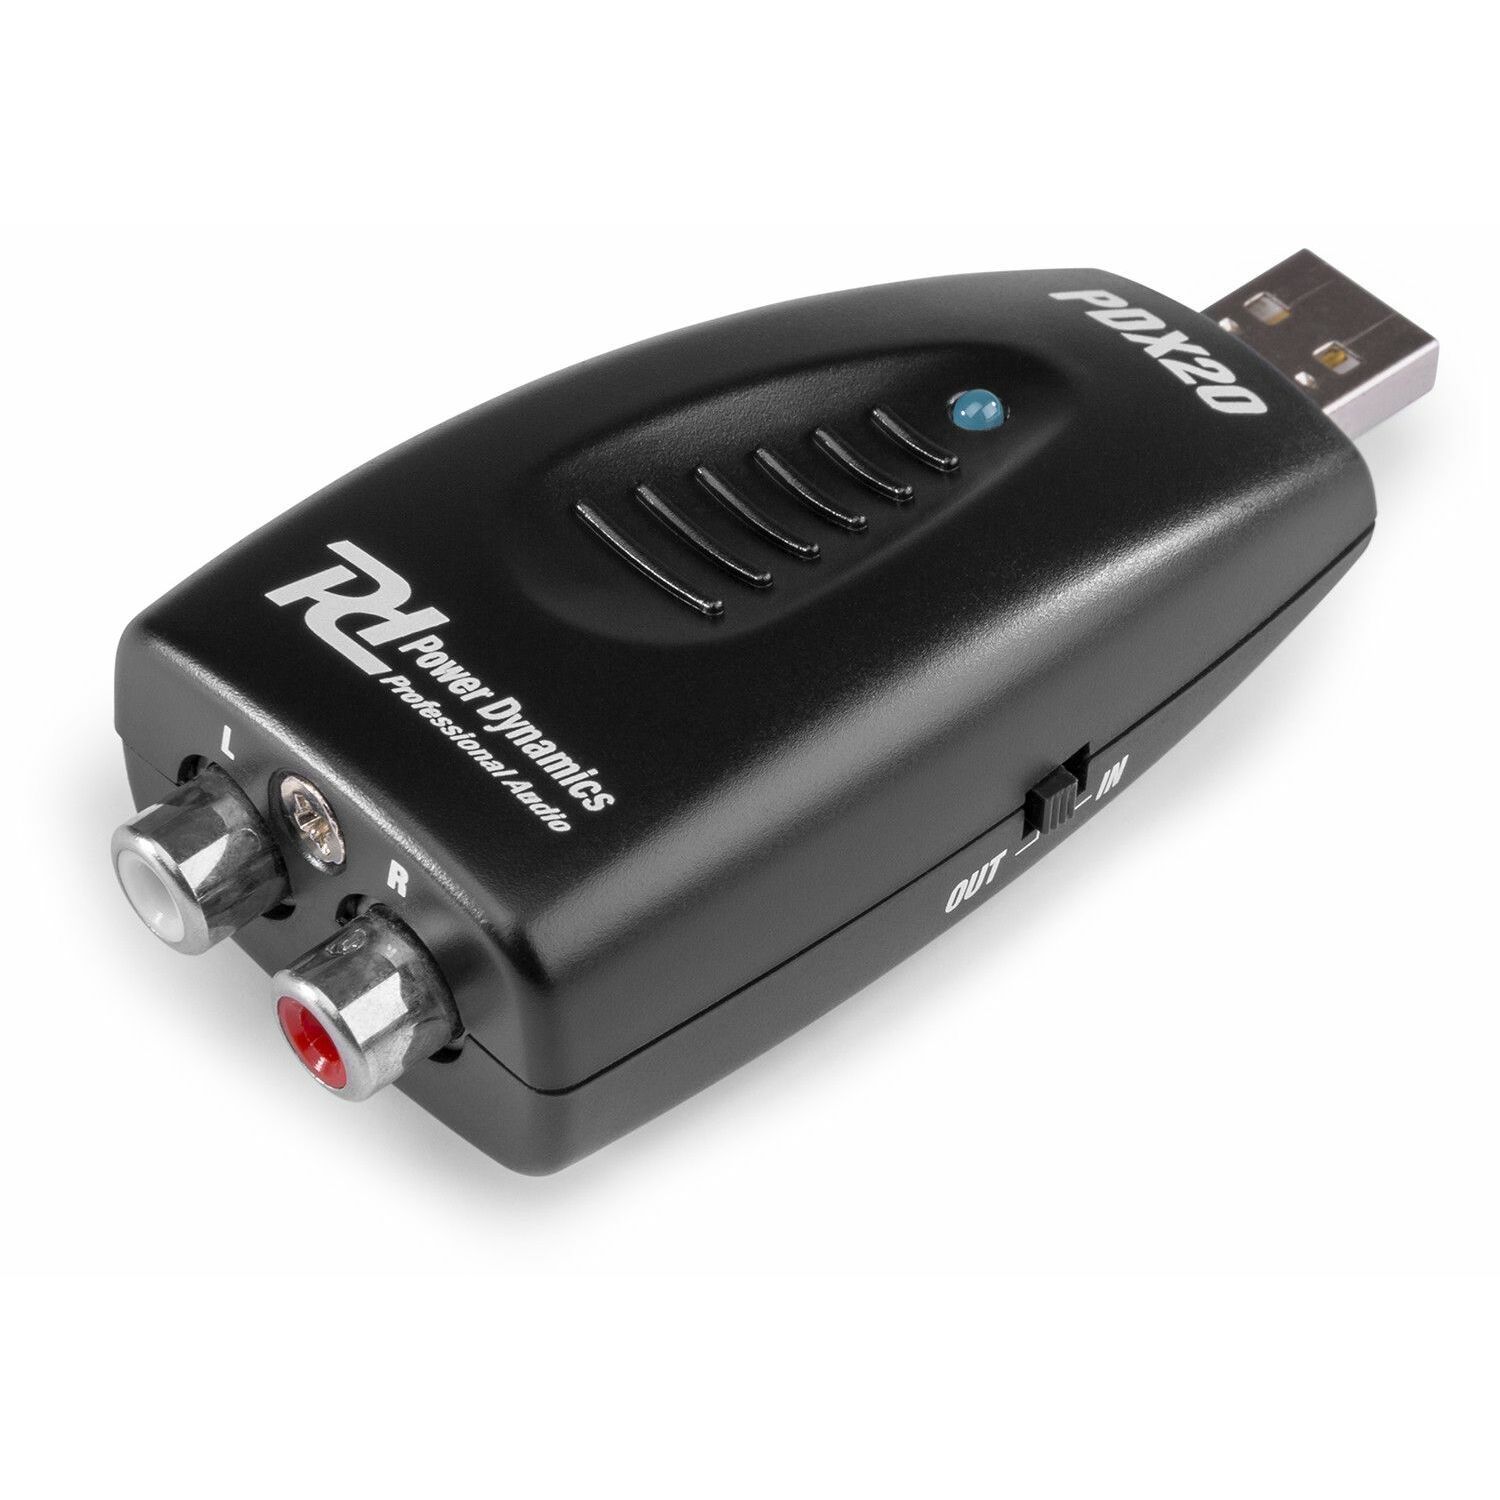 Detector investering Beschrijvend Power Dynamics PDX20 digitaal / analoog converter USB - RCA kopen?